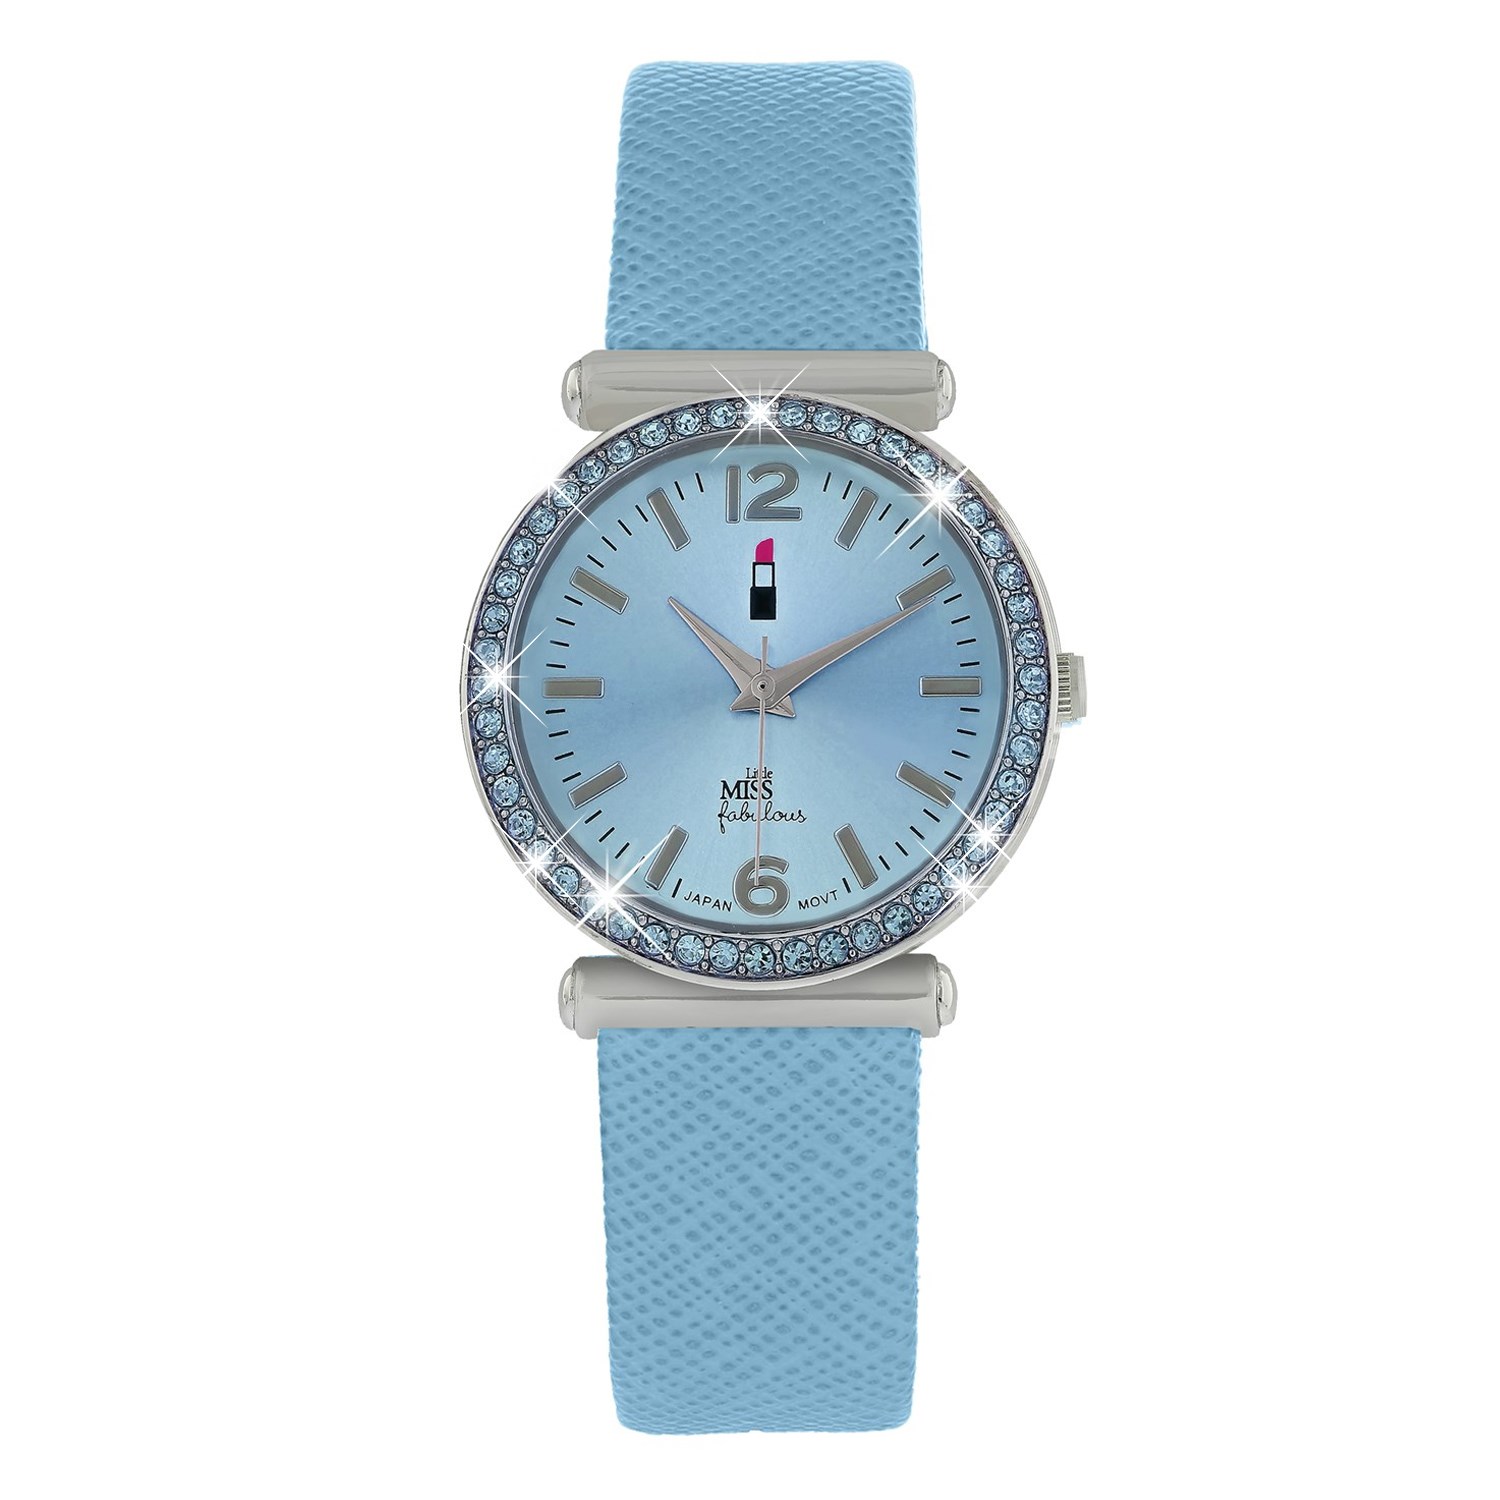 Little Miss Fabulous horloge met blauwe leren band